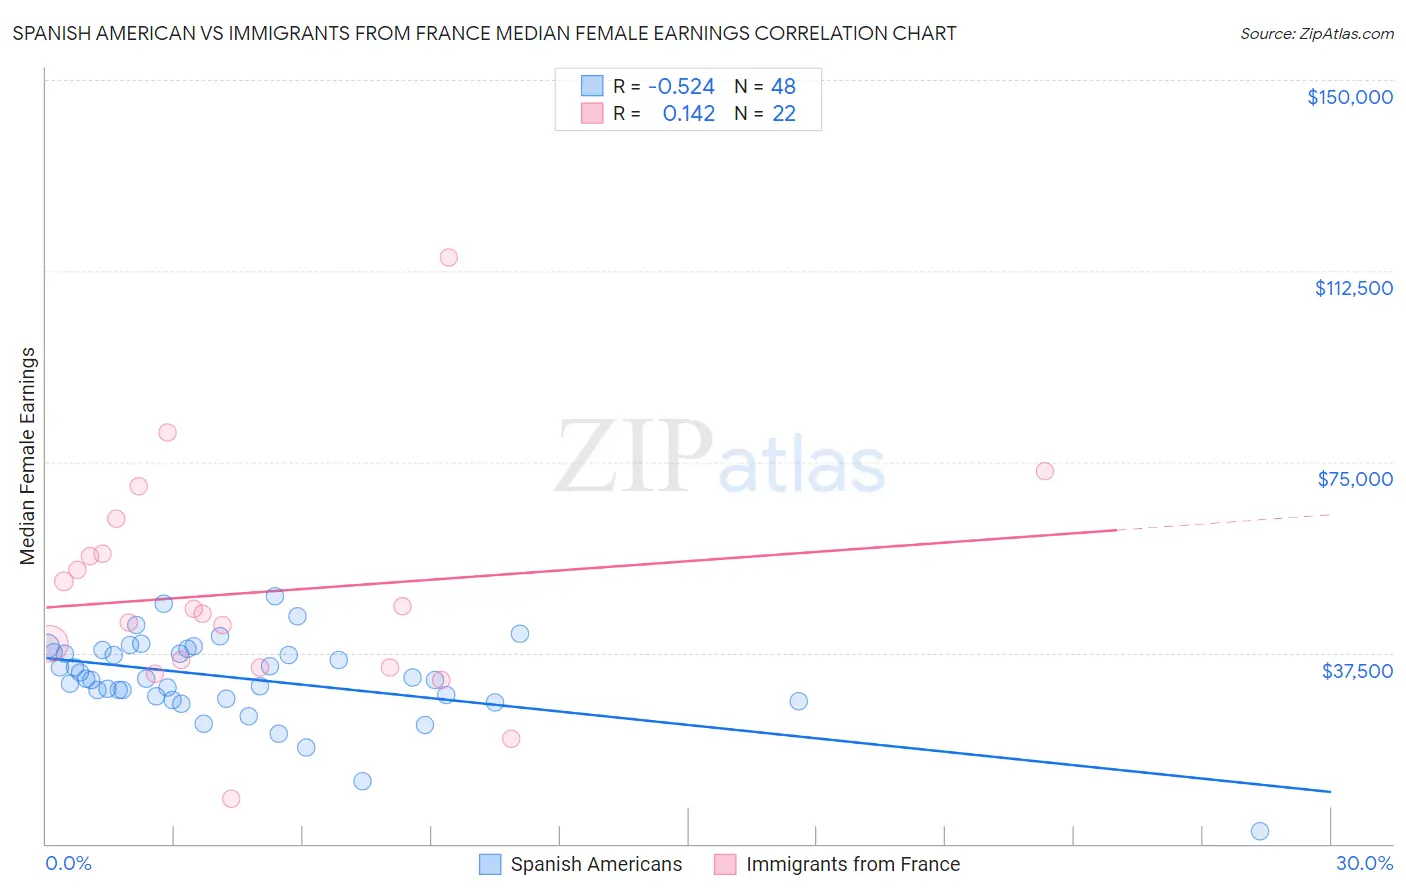 Spanish American vs Immigrants from France Median Female Earnings